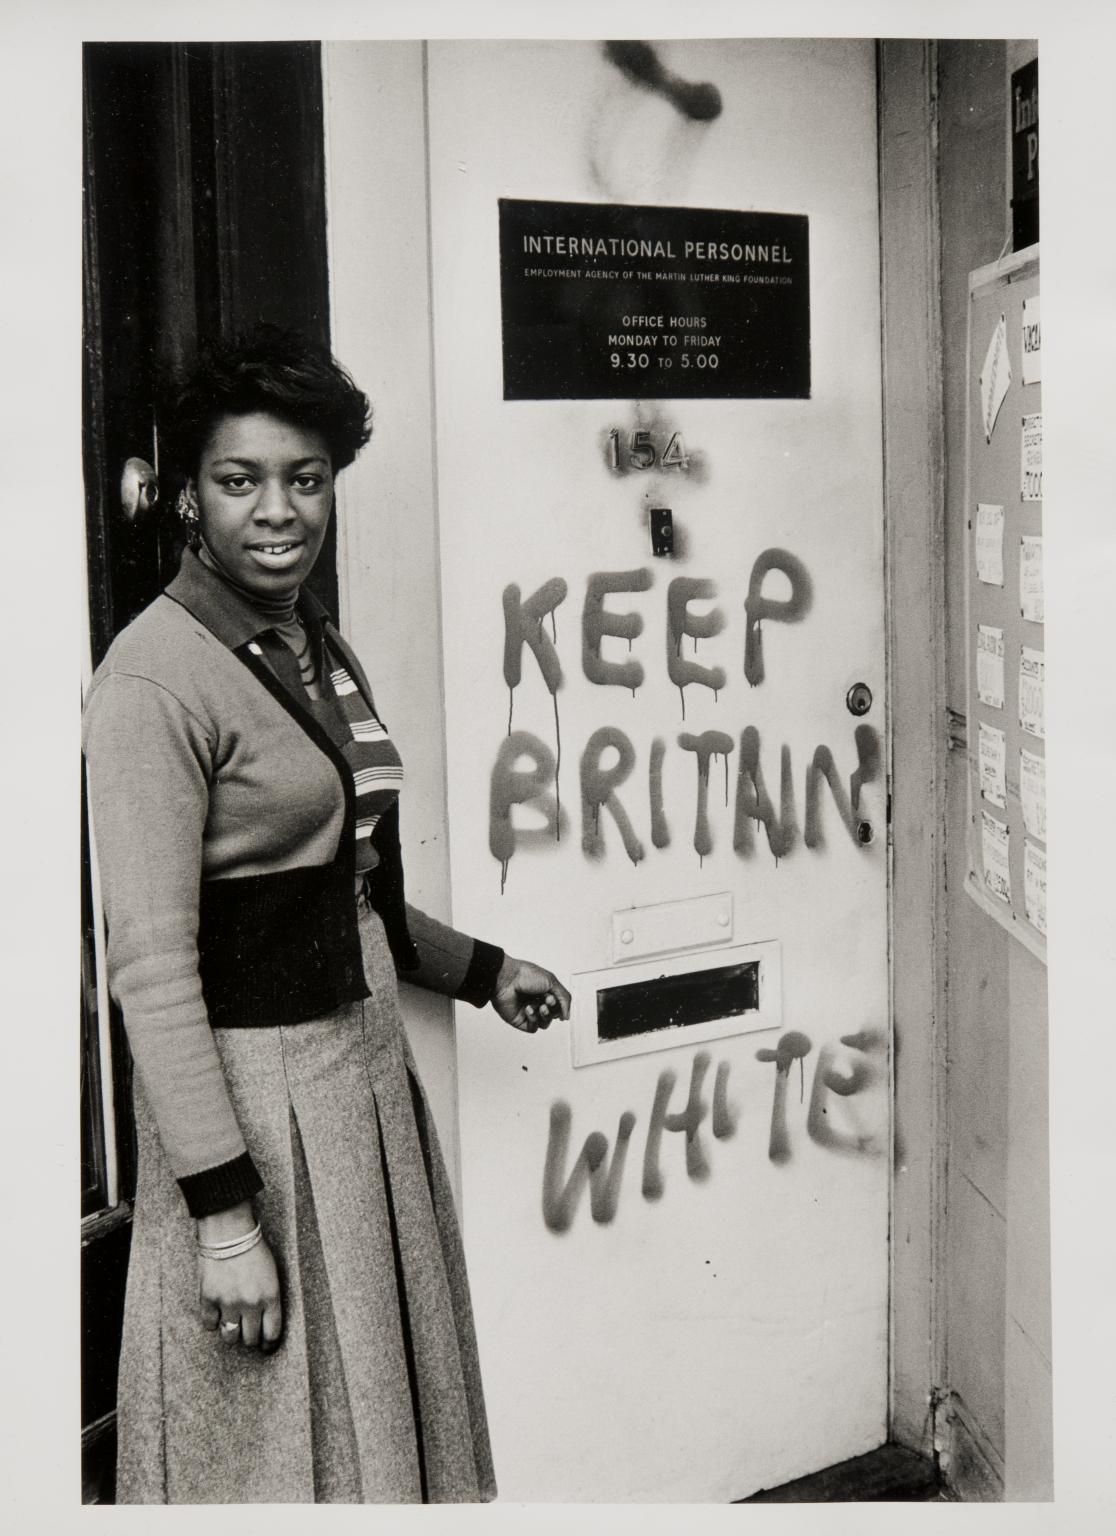 P80293: ‘Keep Britain white’ graffiti, Balham